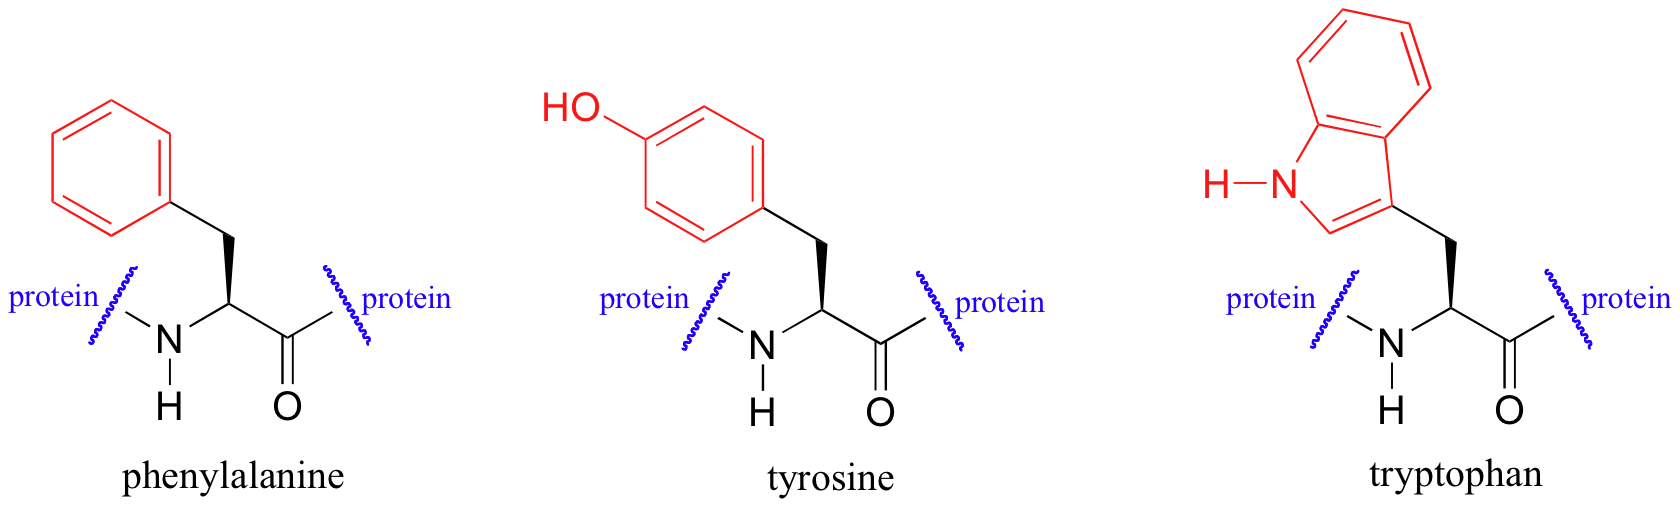 Tres aminoácidos aromáticos. De izquierda a derecha: fenilalanina, tirosina, triptófano.